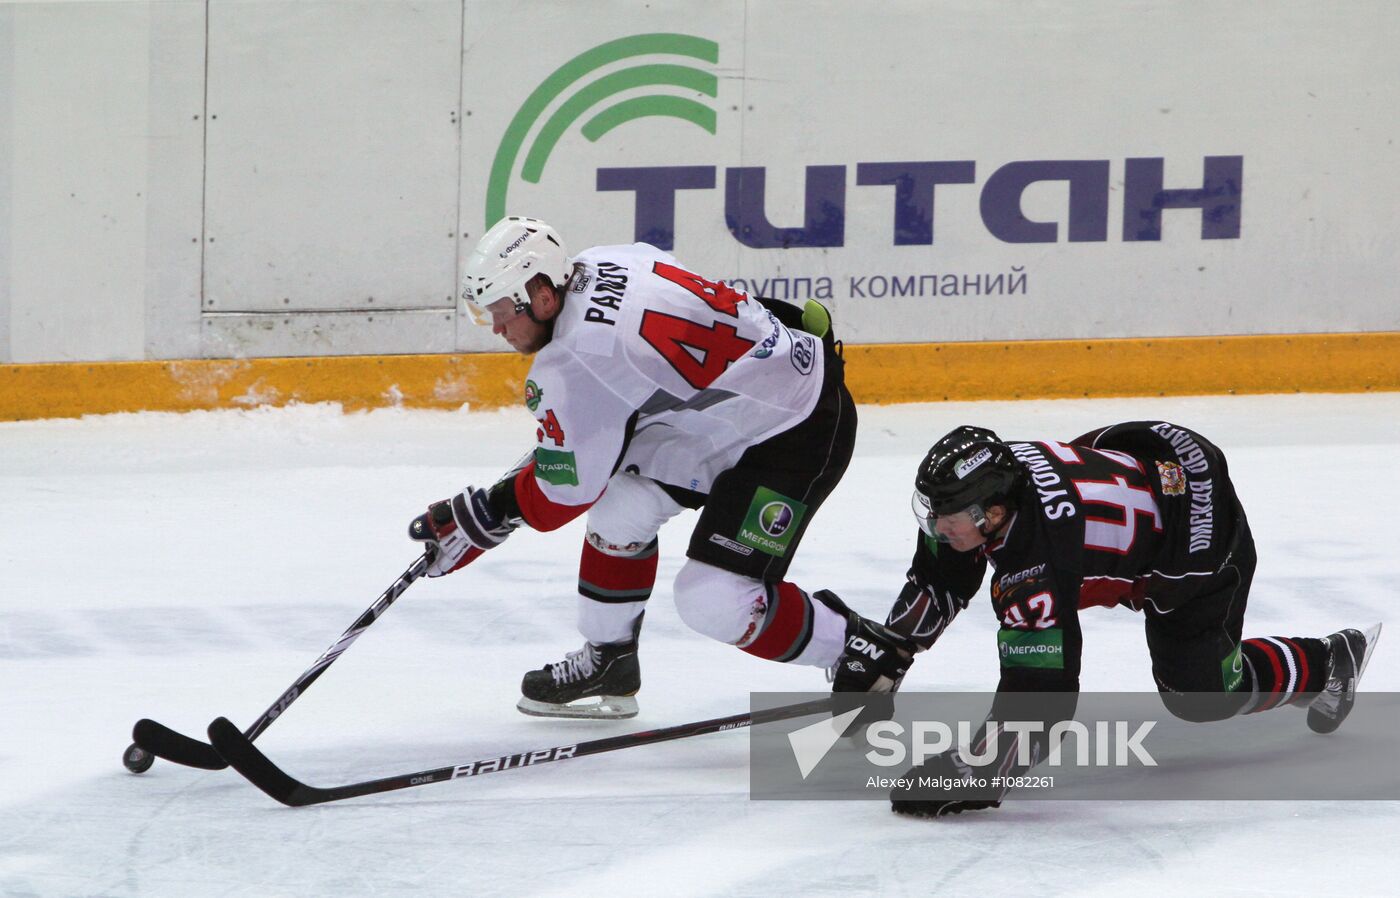 KHL Hockey: Avangard vs. Tractor